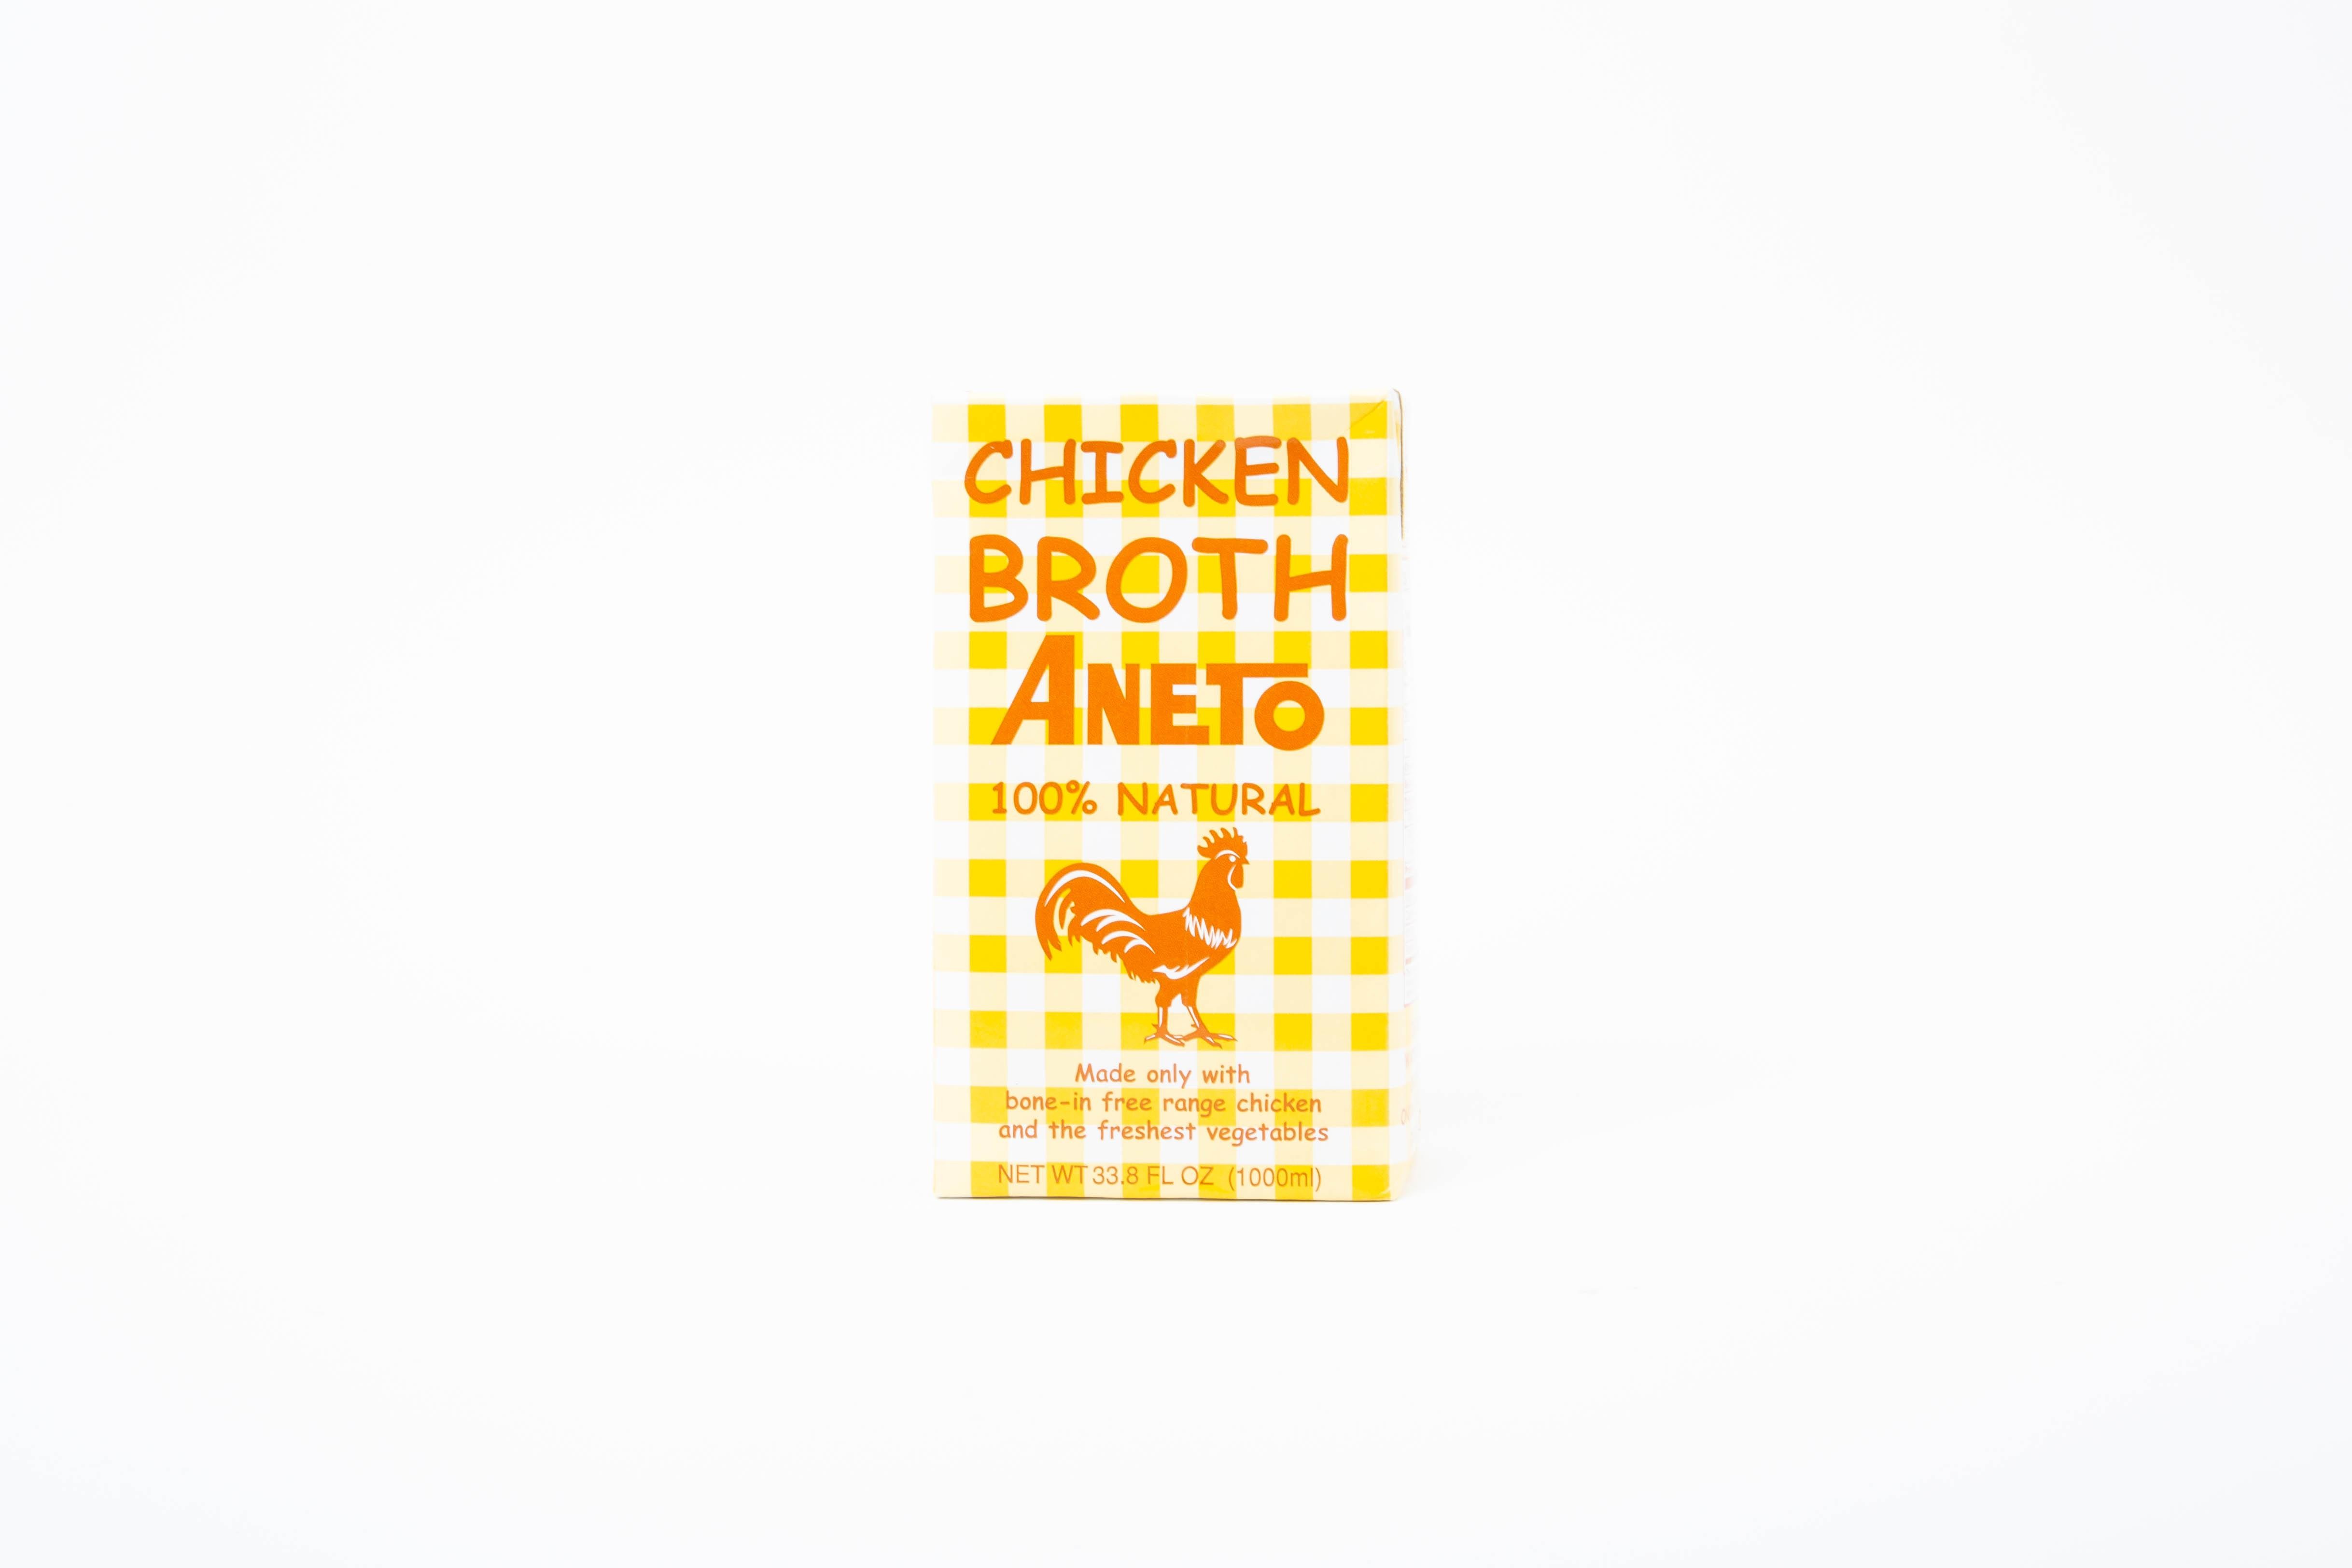 Aneto Chicken Broth